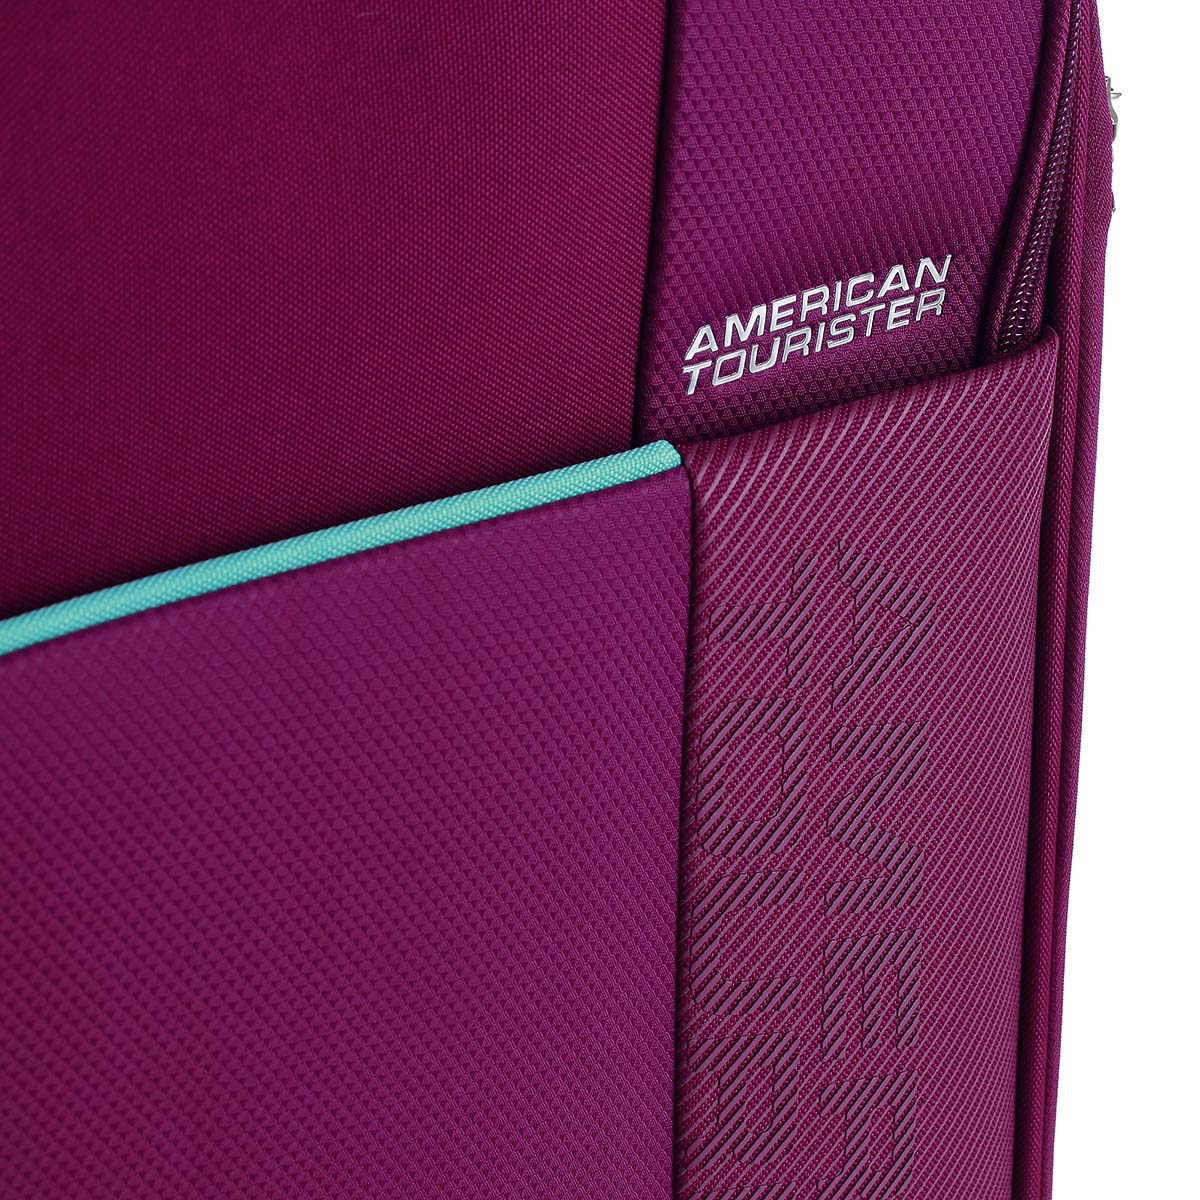 American Tourister Handgepäck Koffer Fun Cruise 55cm purple/auqamarine